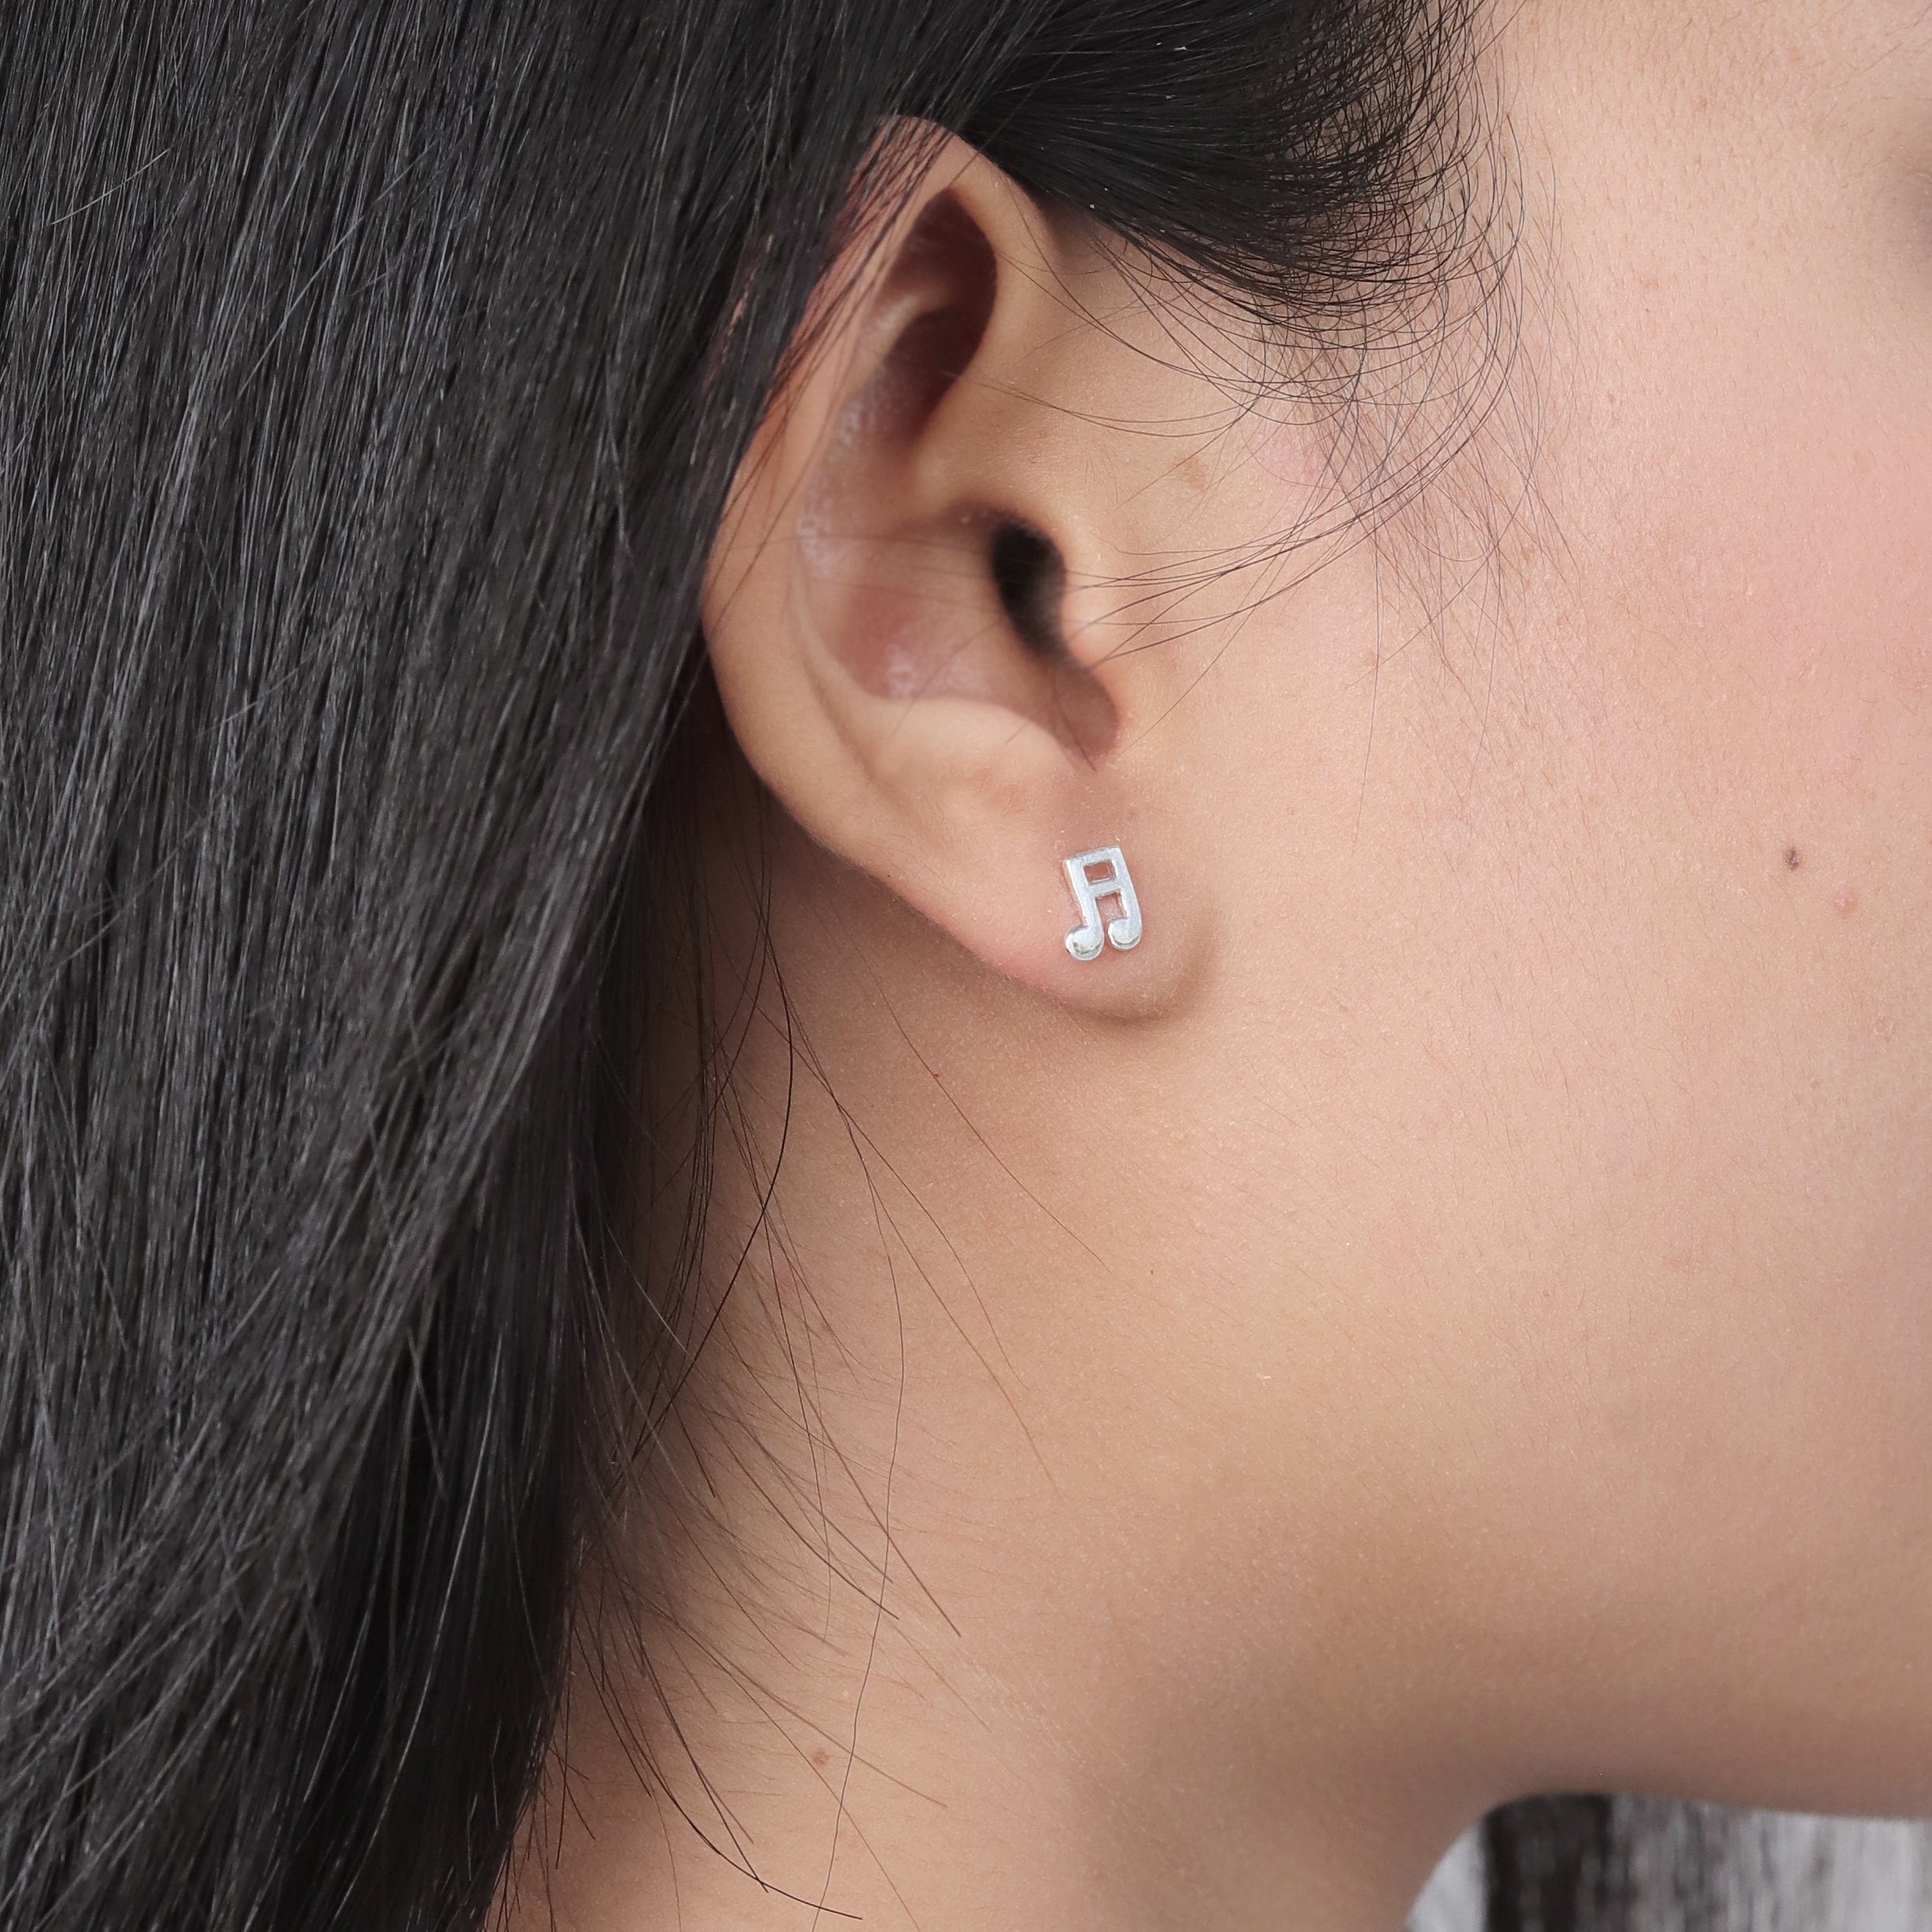 Boma Jewelry Earrings Musical Earring Studs